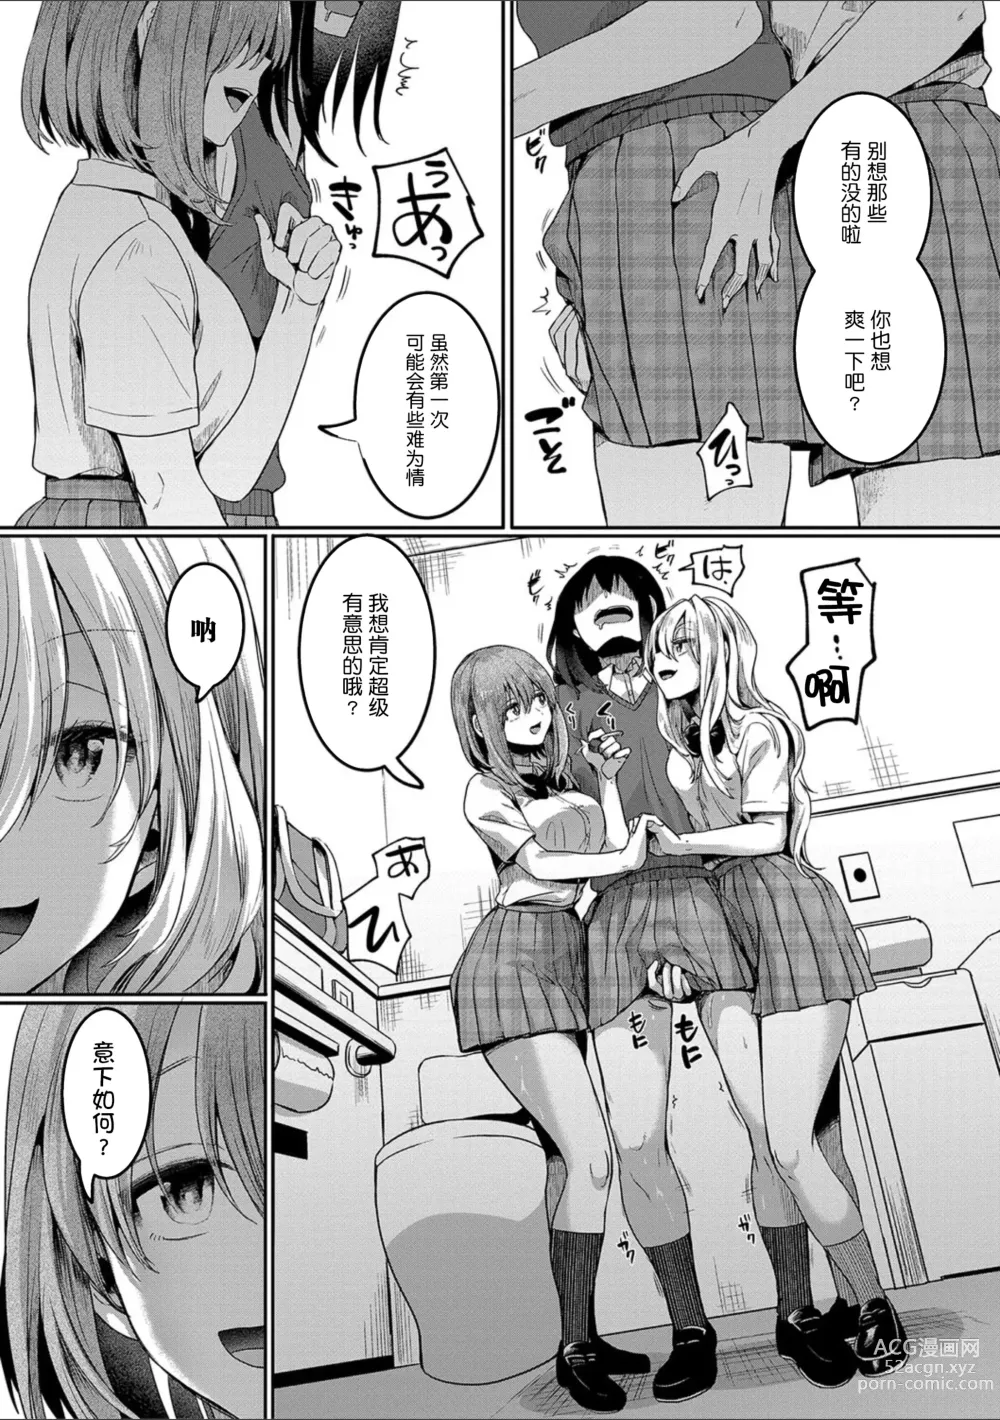 Page 204 of manga Watashi wa Onnanoko ga Suki datta Hazu nano ni - But I fell in with something different.